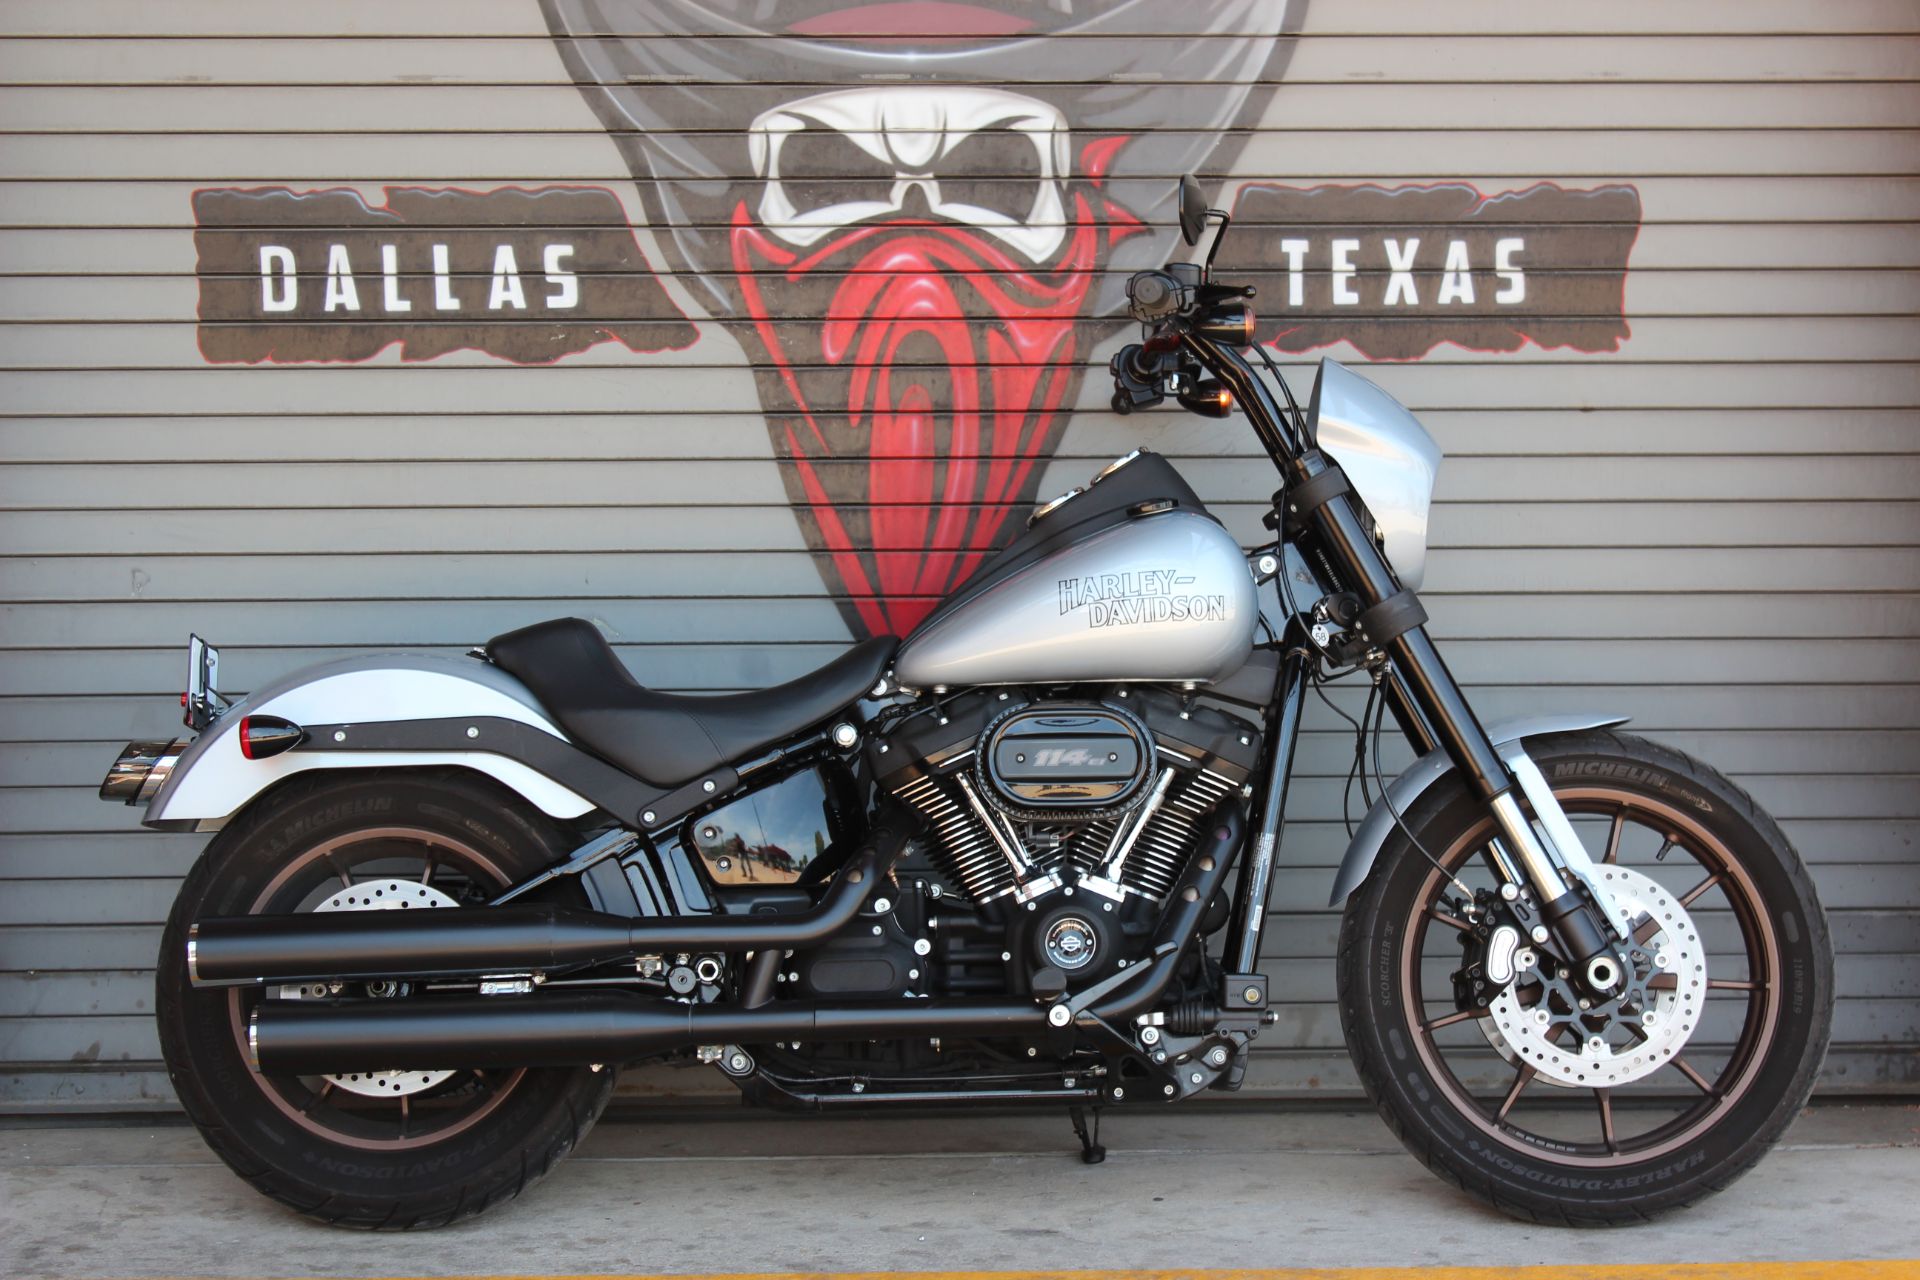 2020 Harley-Davidson Low Rider®S in Carrollton, Texas - Photo 3